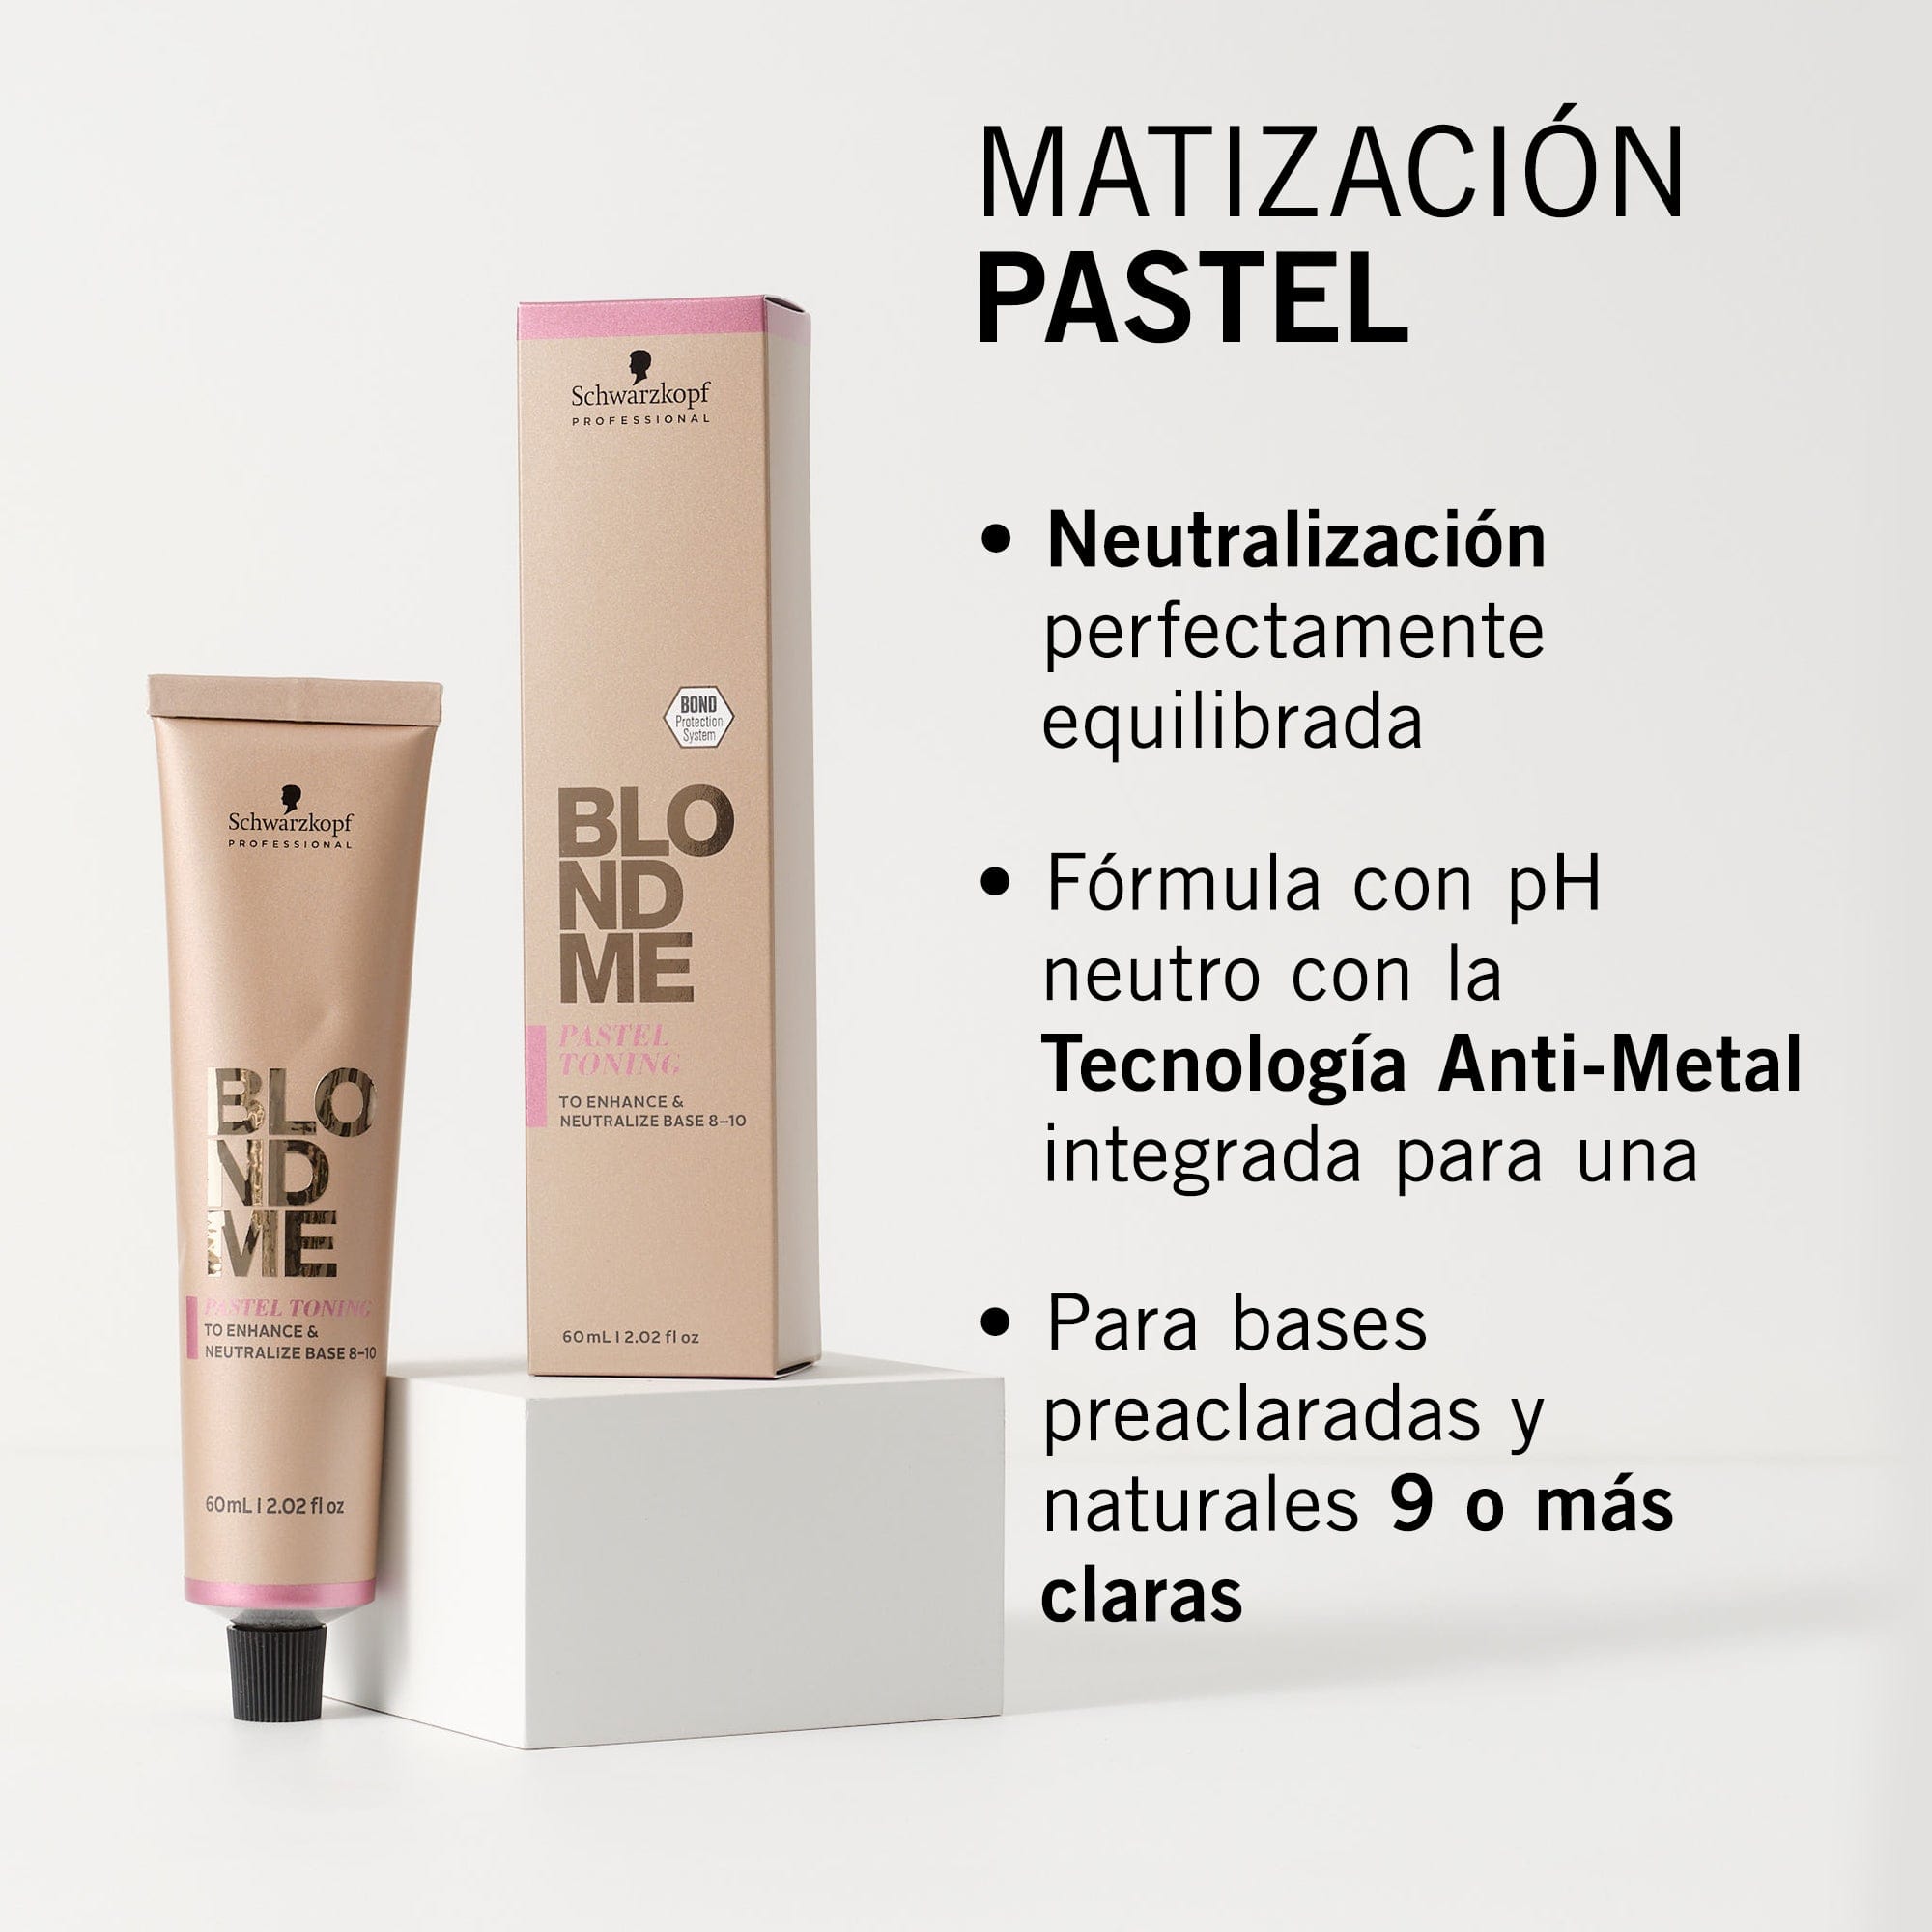 BLONDME Matiz BLONDME Matización Pastel Tono Galleta 60ml Roberta Beauty Club Tienda Online Productos de Peluqueria